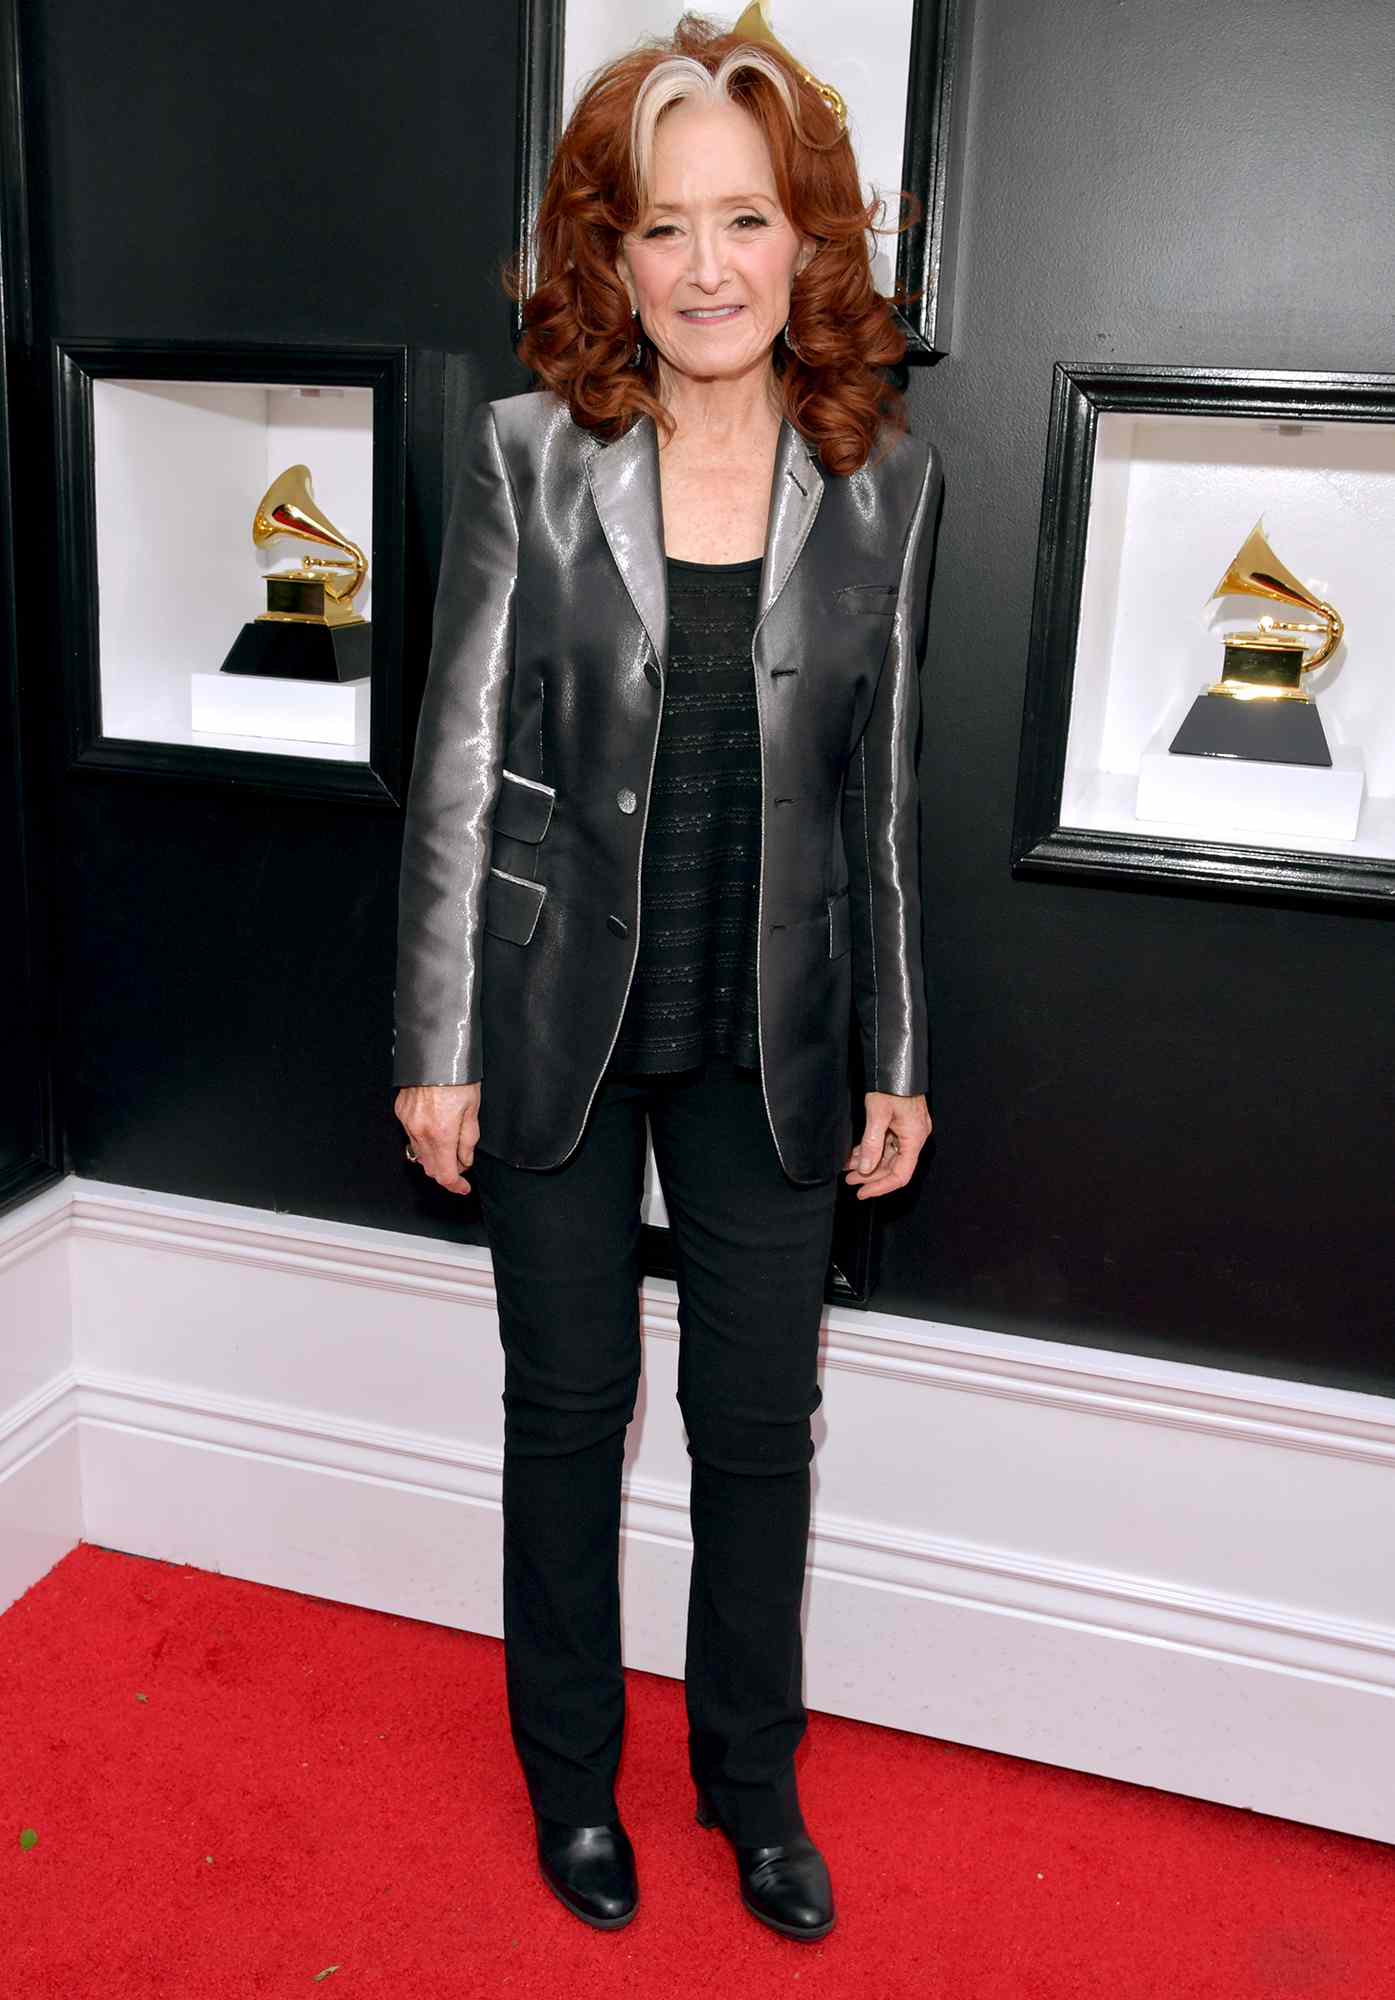 Bonnie Raitt Grammys Awards Red Carpet